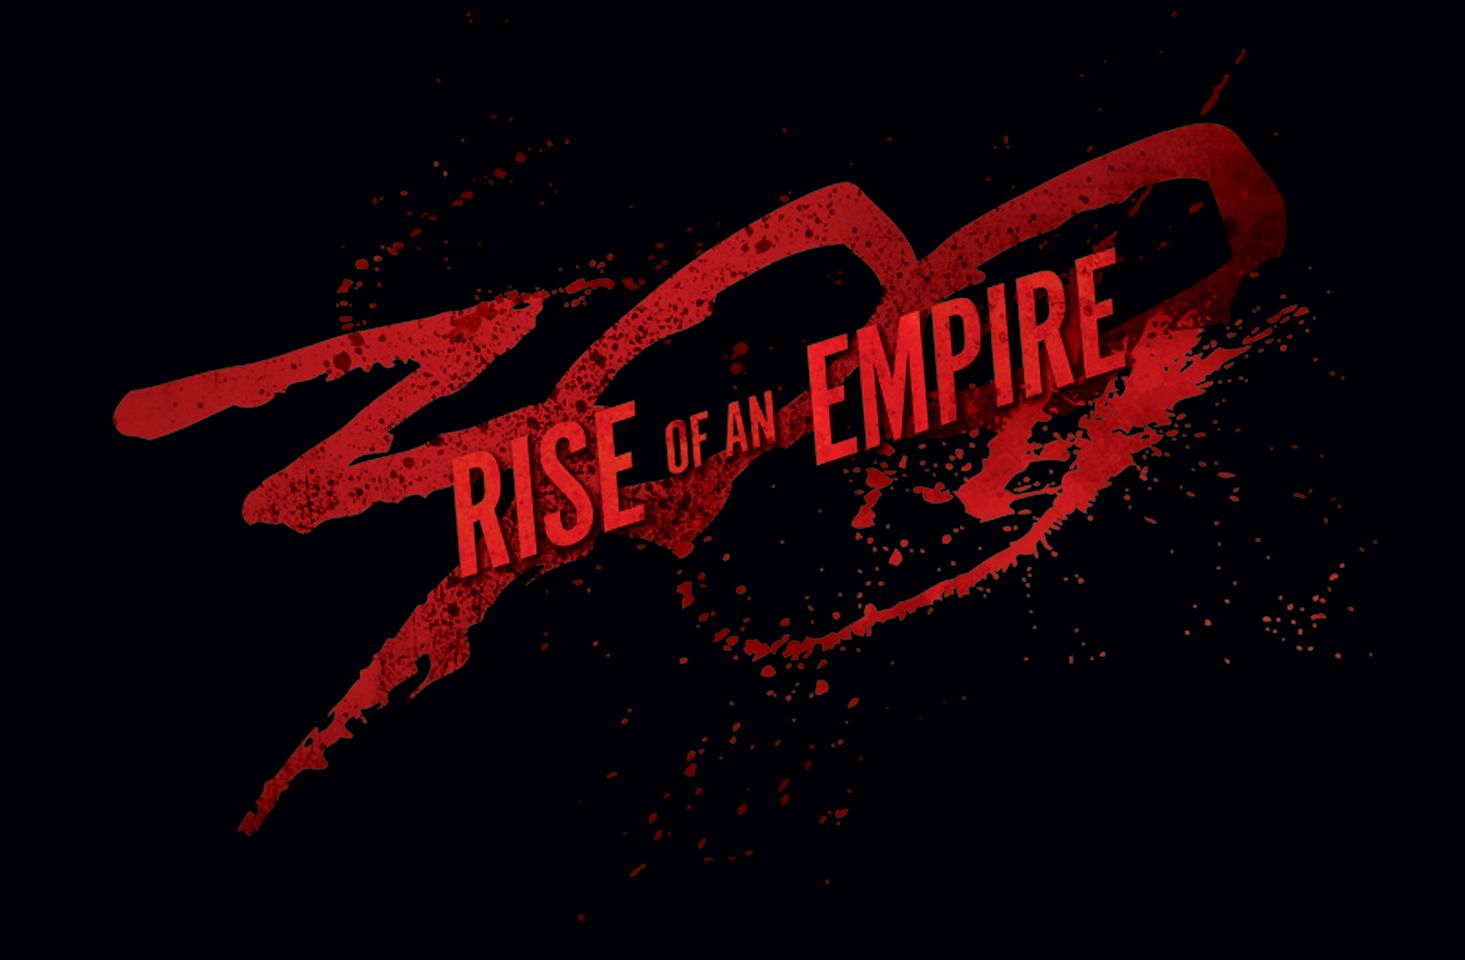 300: Rise of an Empire logo